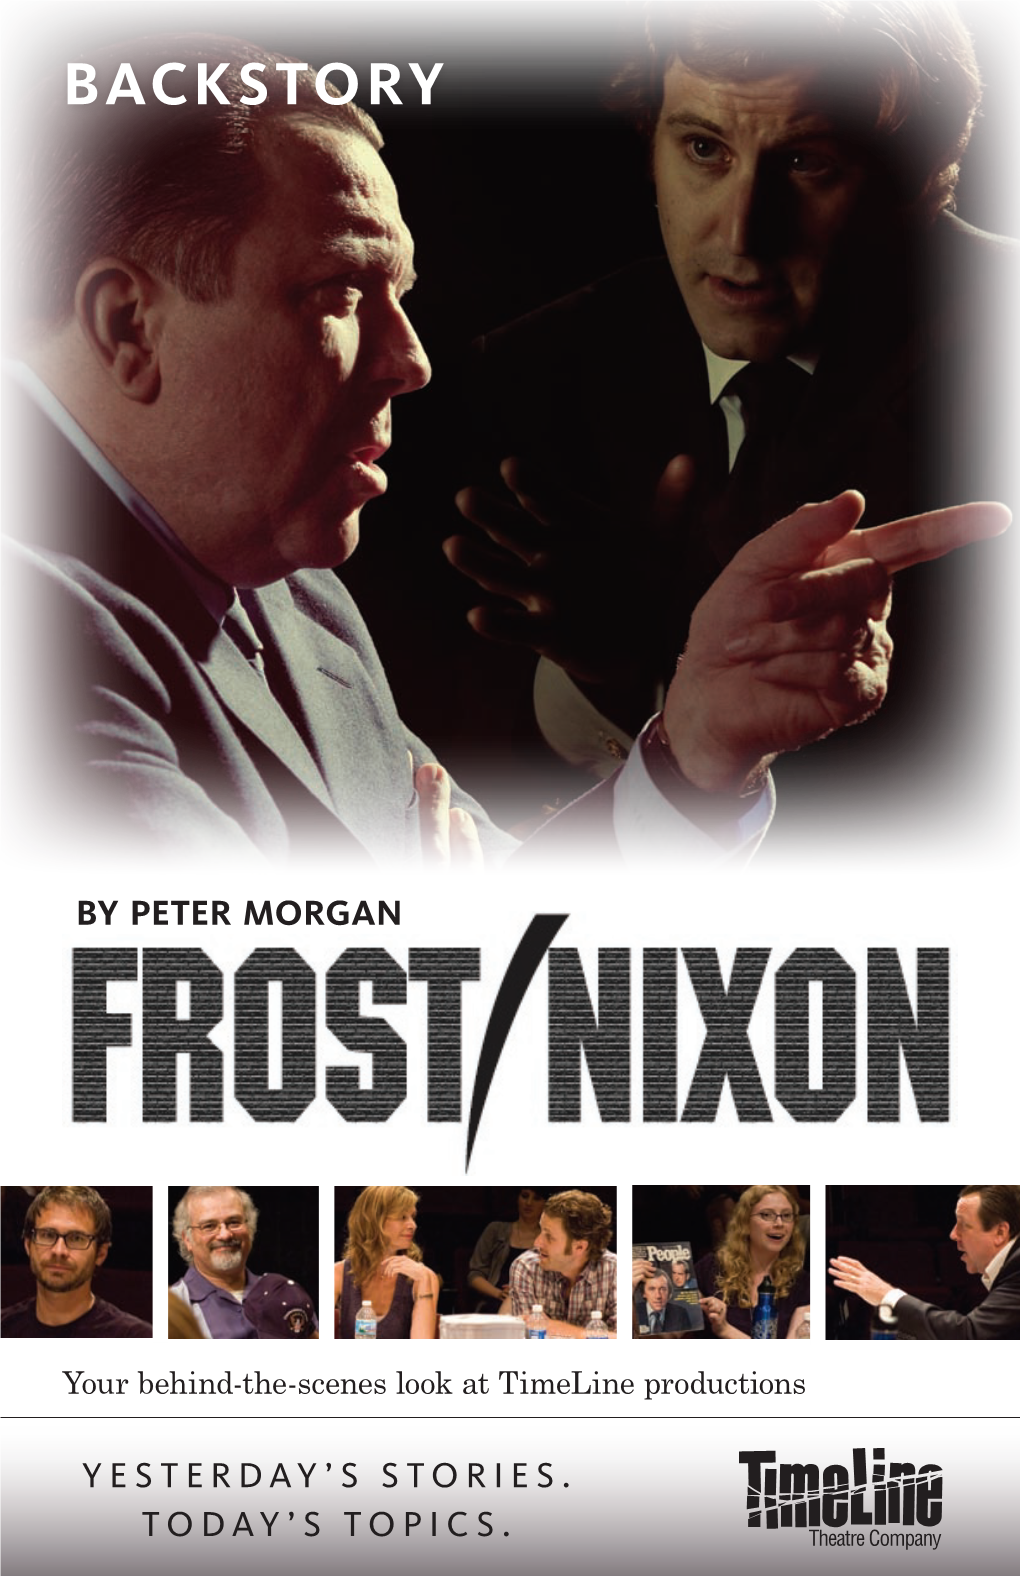 The President Frost/Nixon